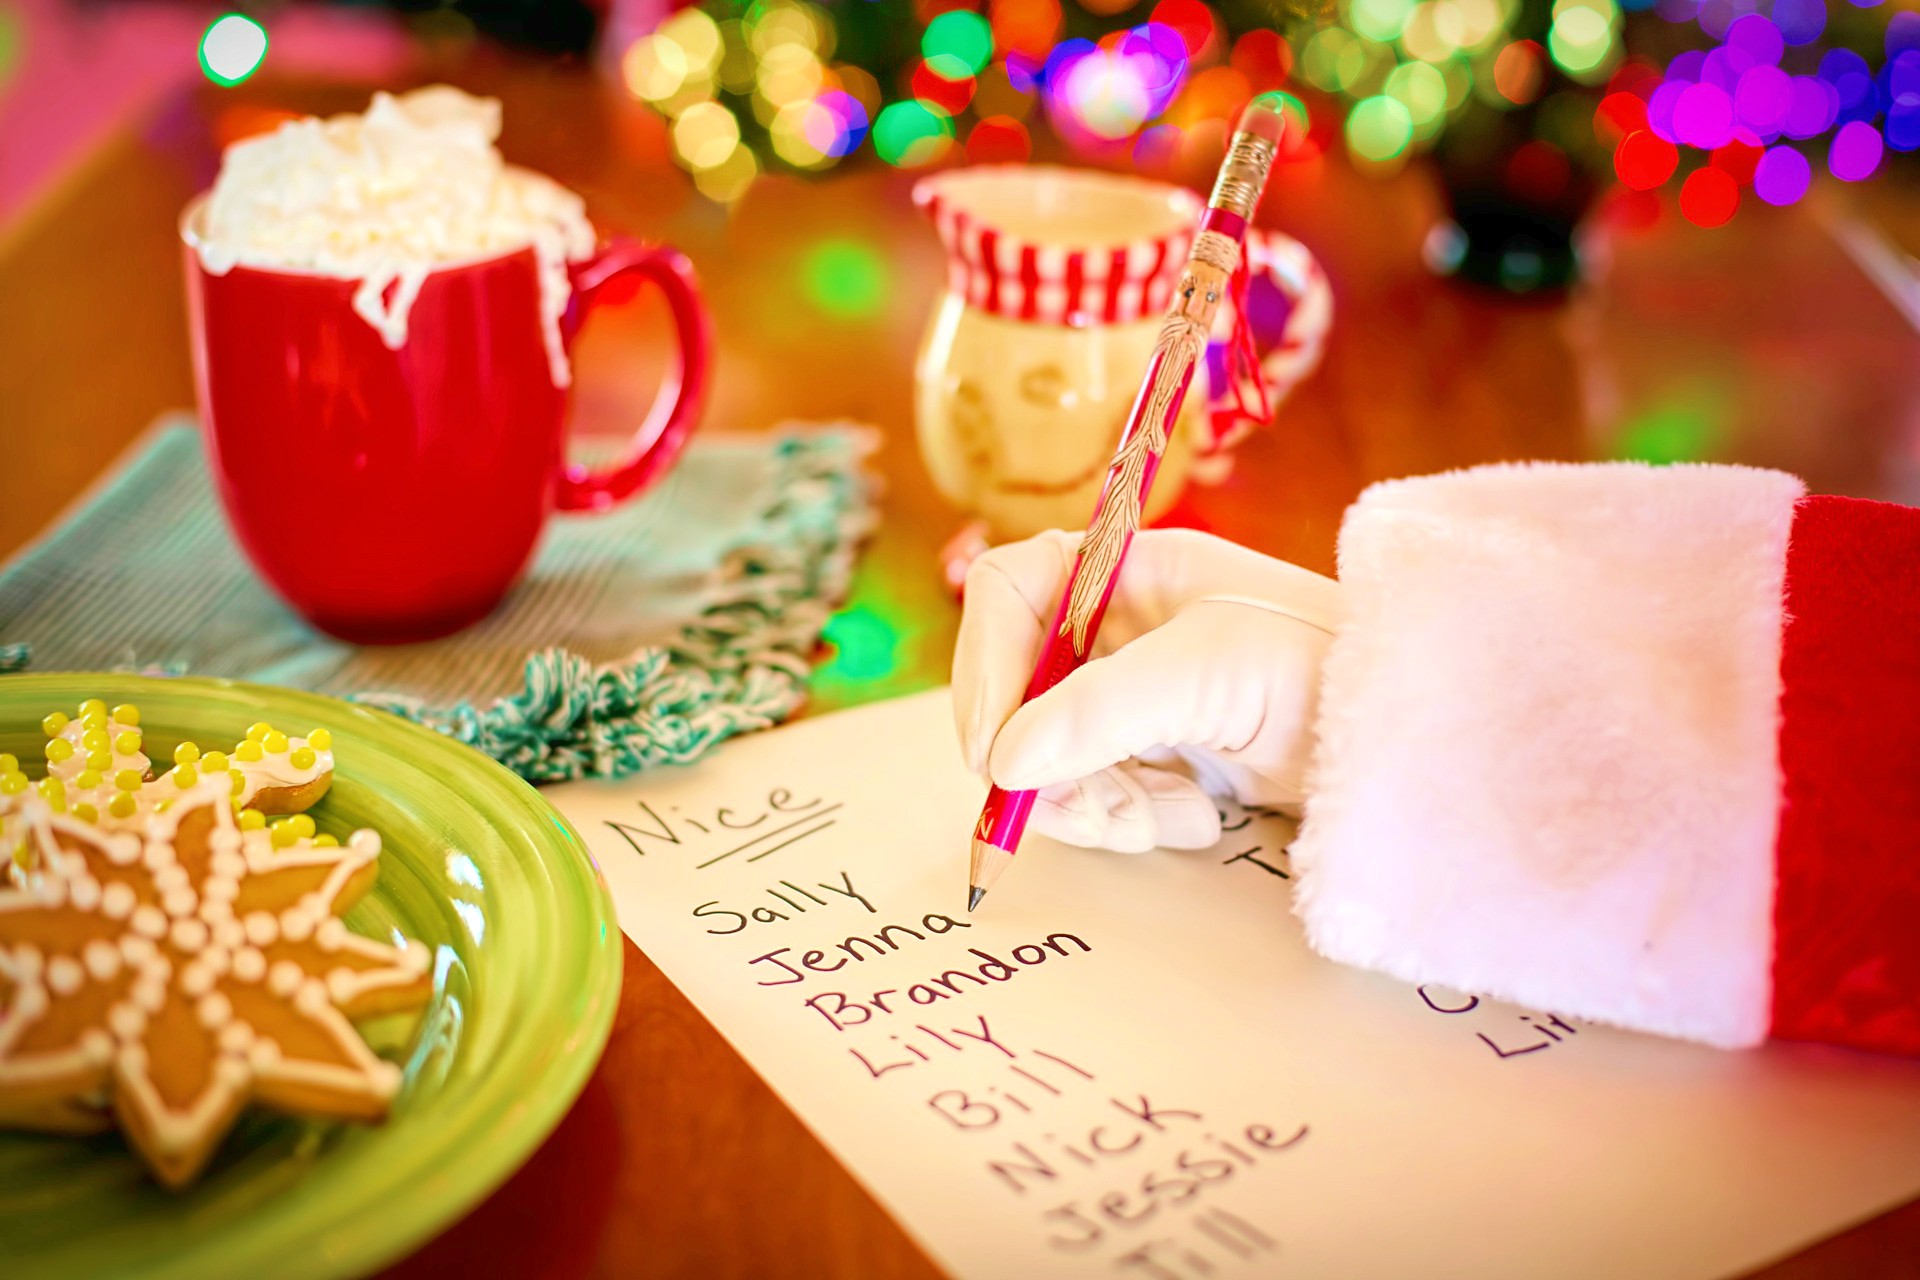 <img src="santa.jpg" alt="santa writing a list"/> 